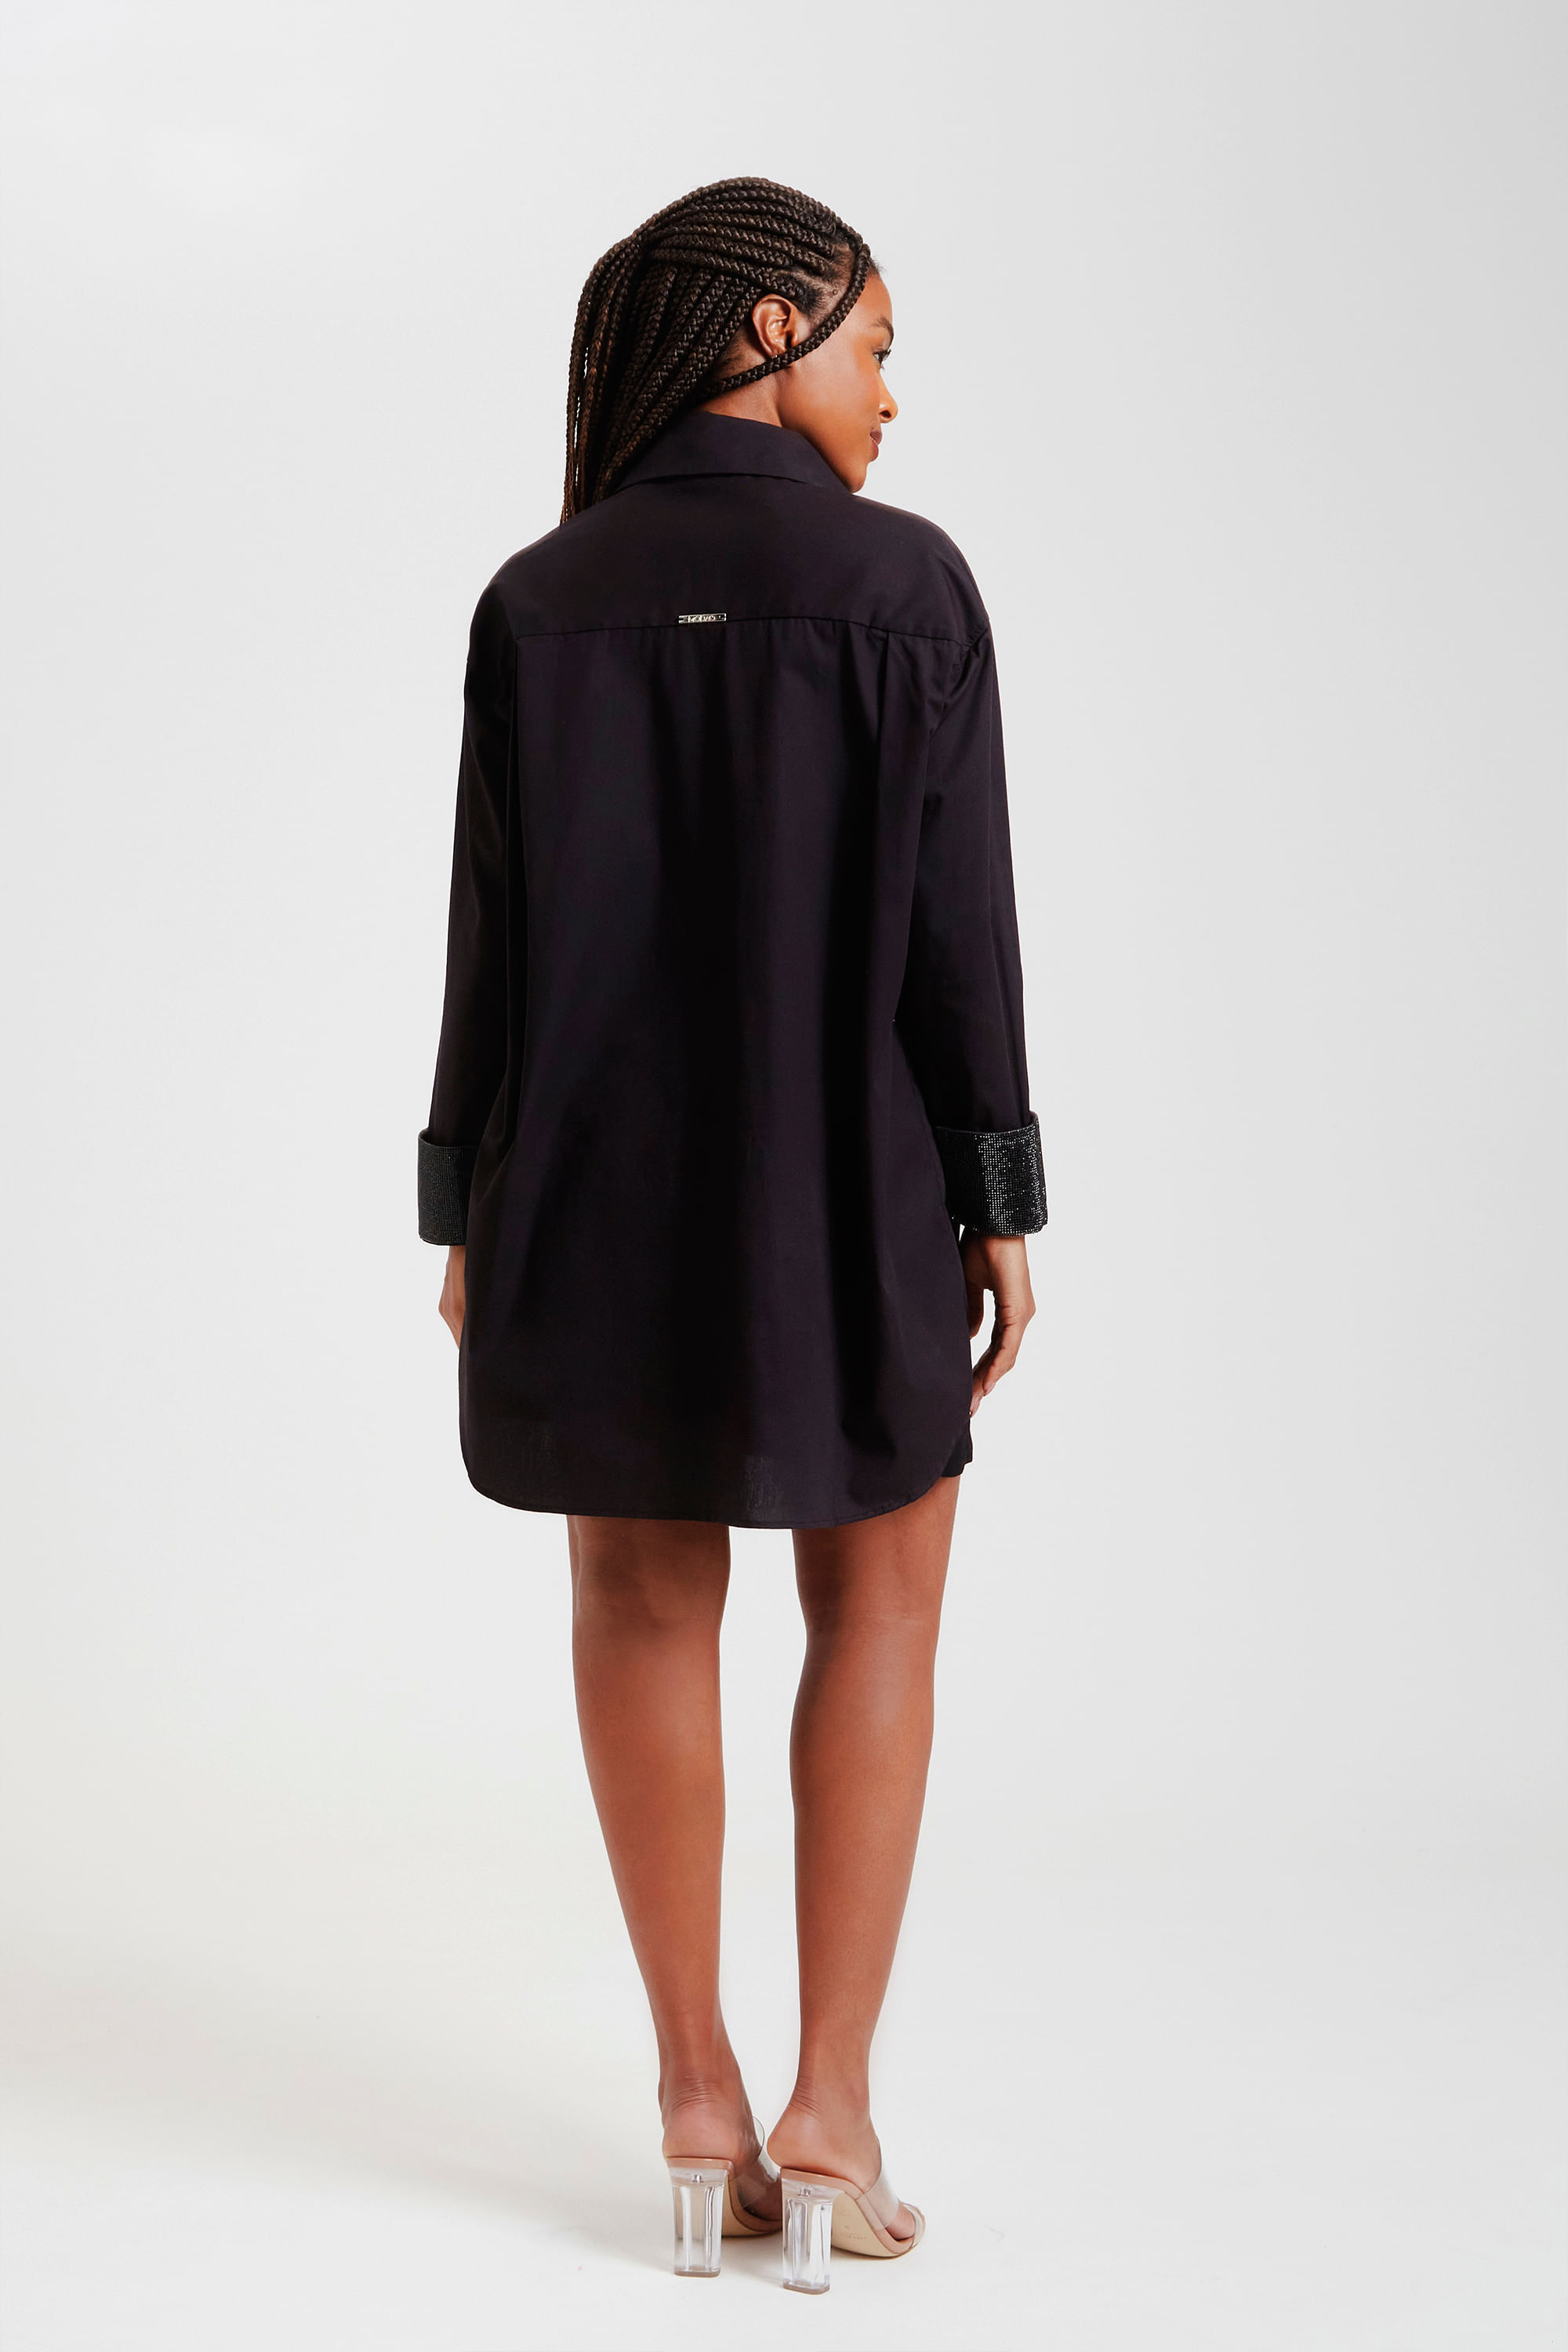 Missguided Black Lace Trim Shirt Dress